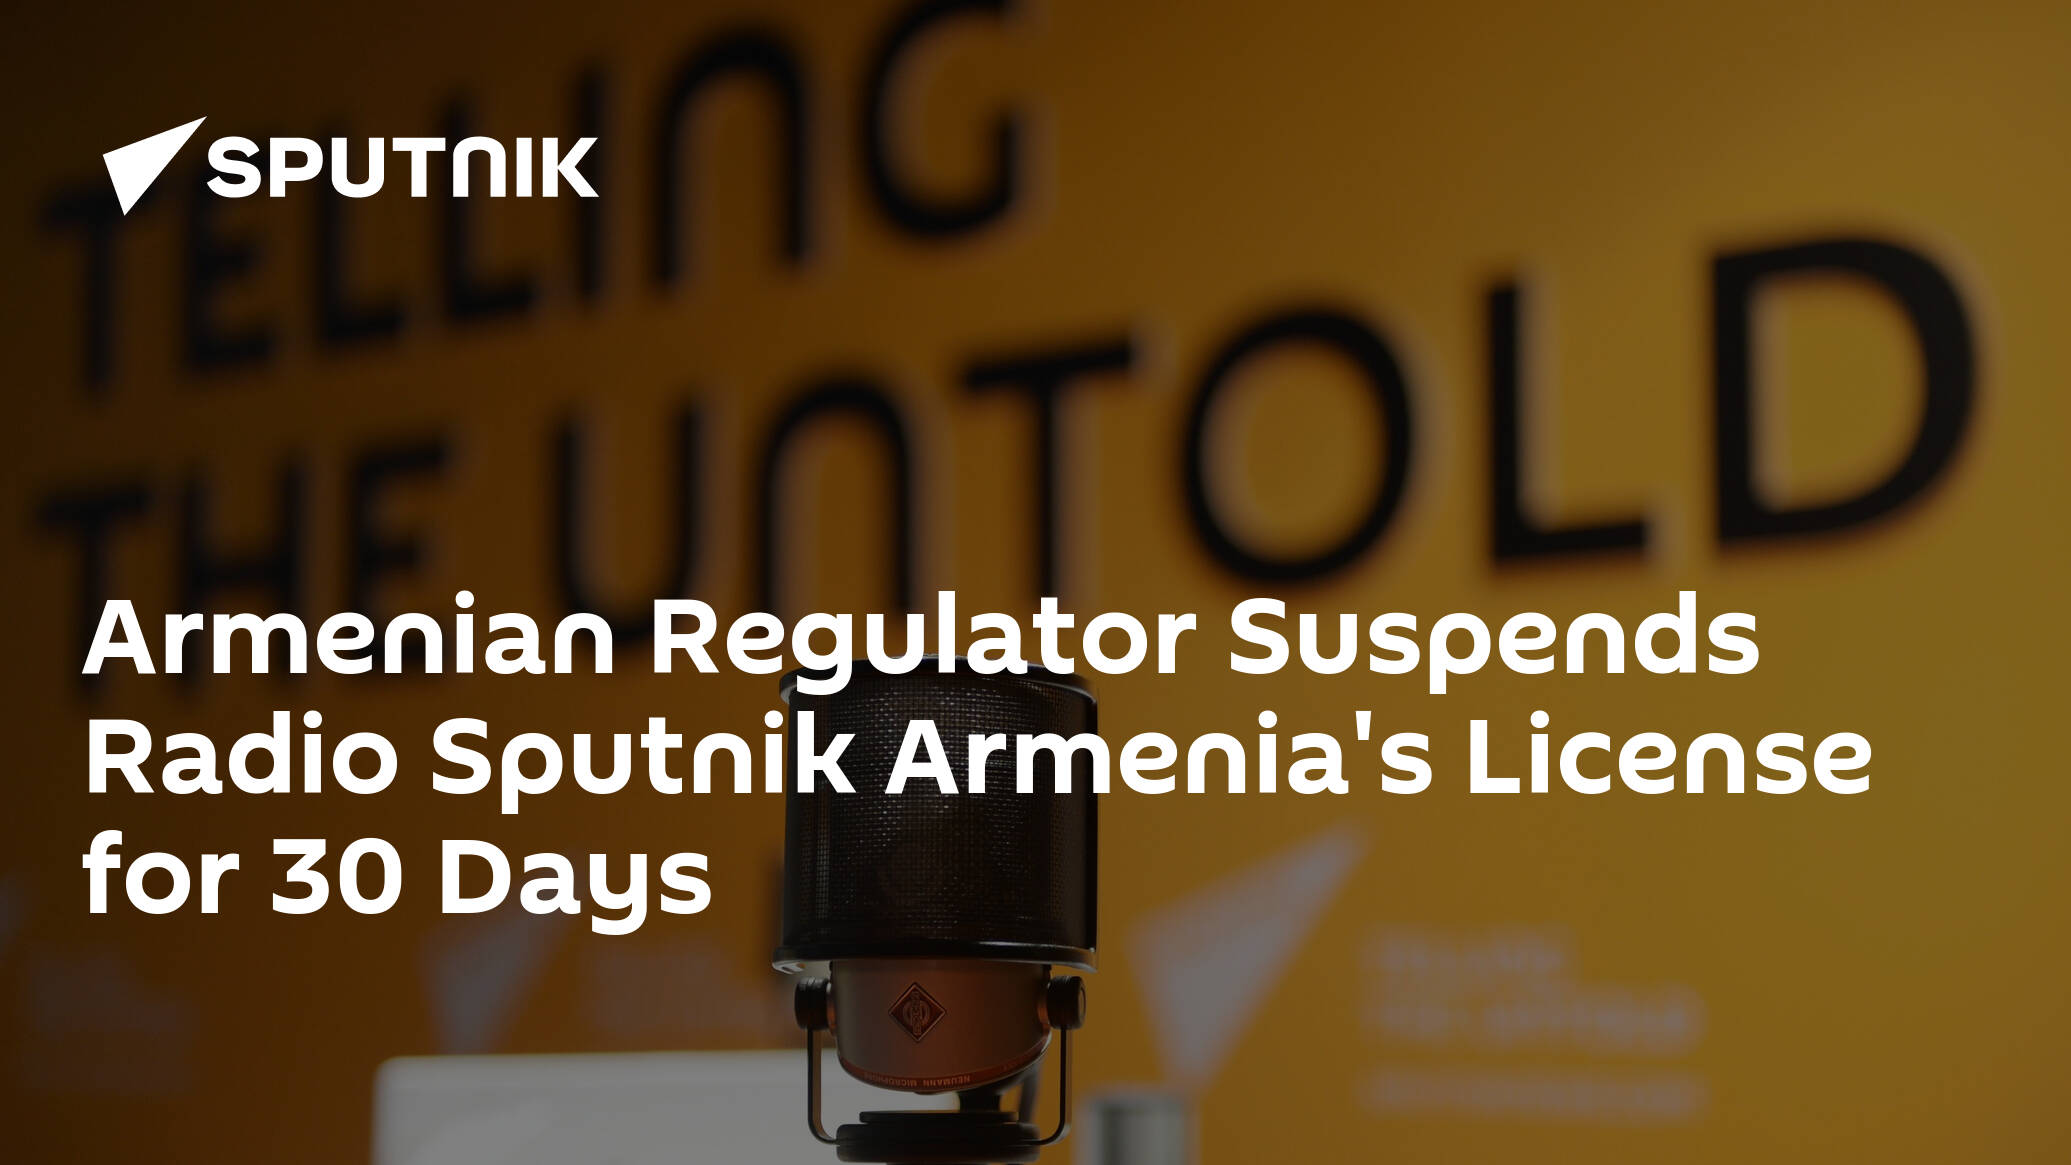 Armenian Regulator Suspends License of Radio Sputnik Armenia for 30 Days